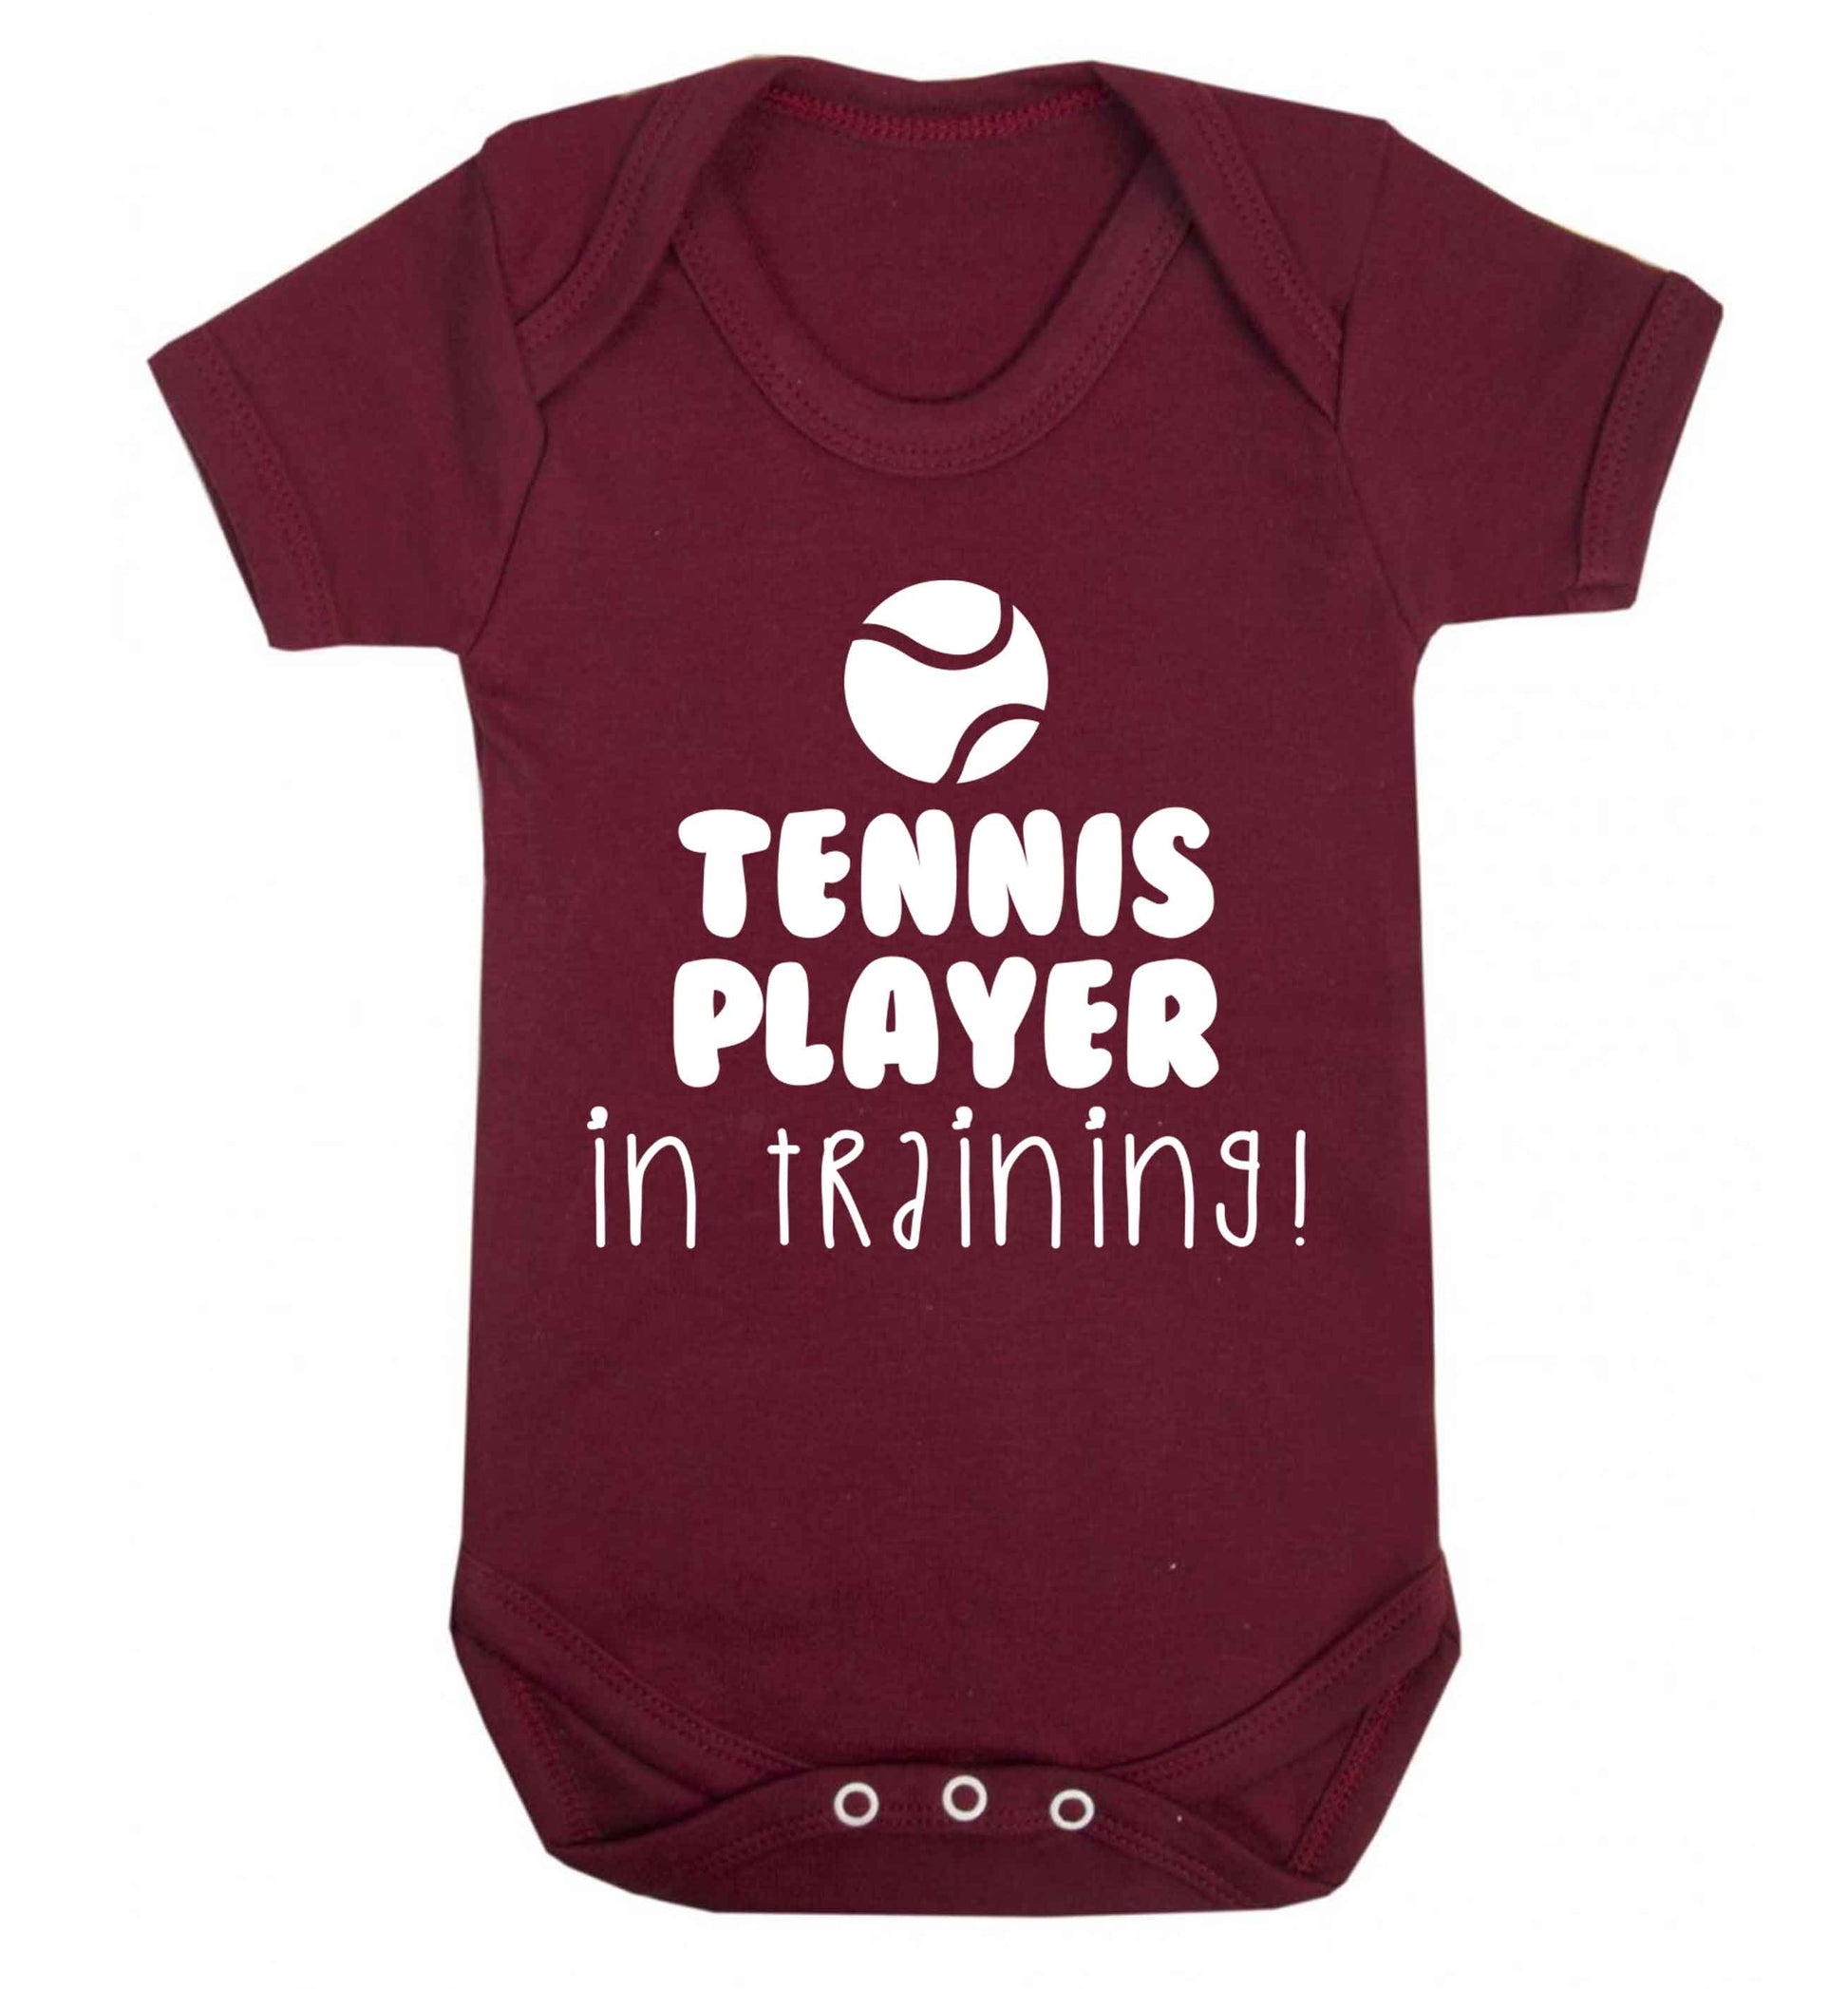 Tennis player in training Baby Vest maroon 18-24 months